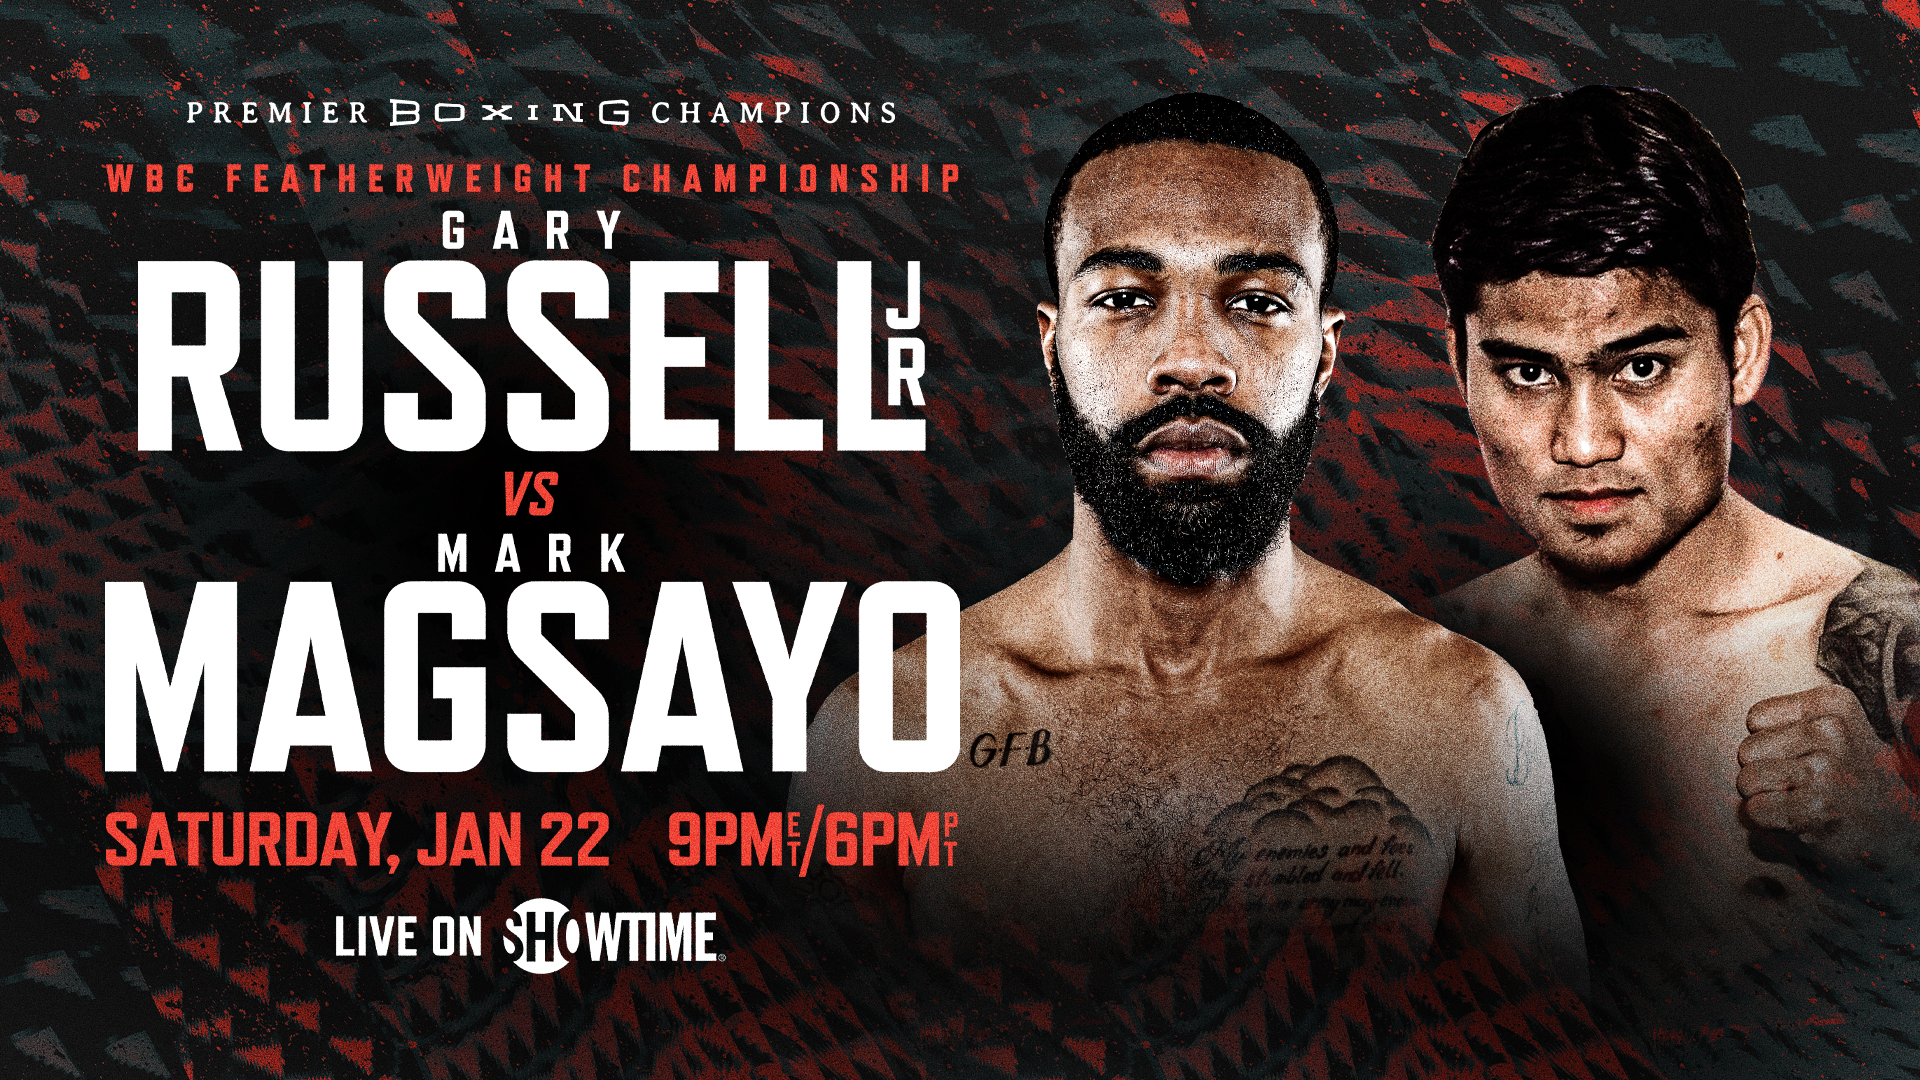 Gary Russel Jr. vs. Mark Magsayo: anteprima del match